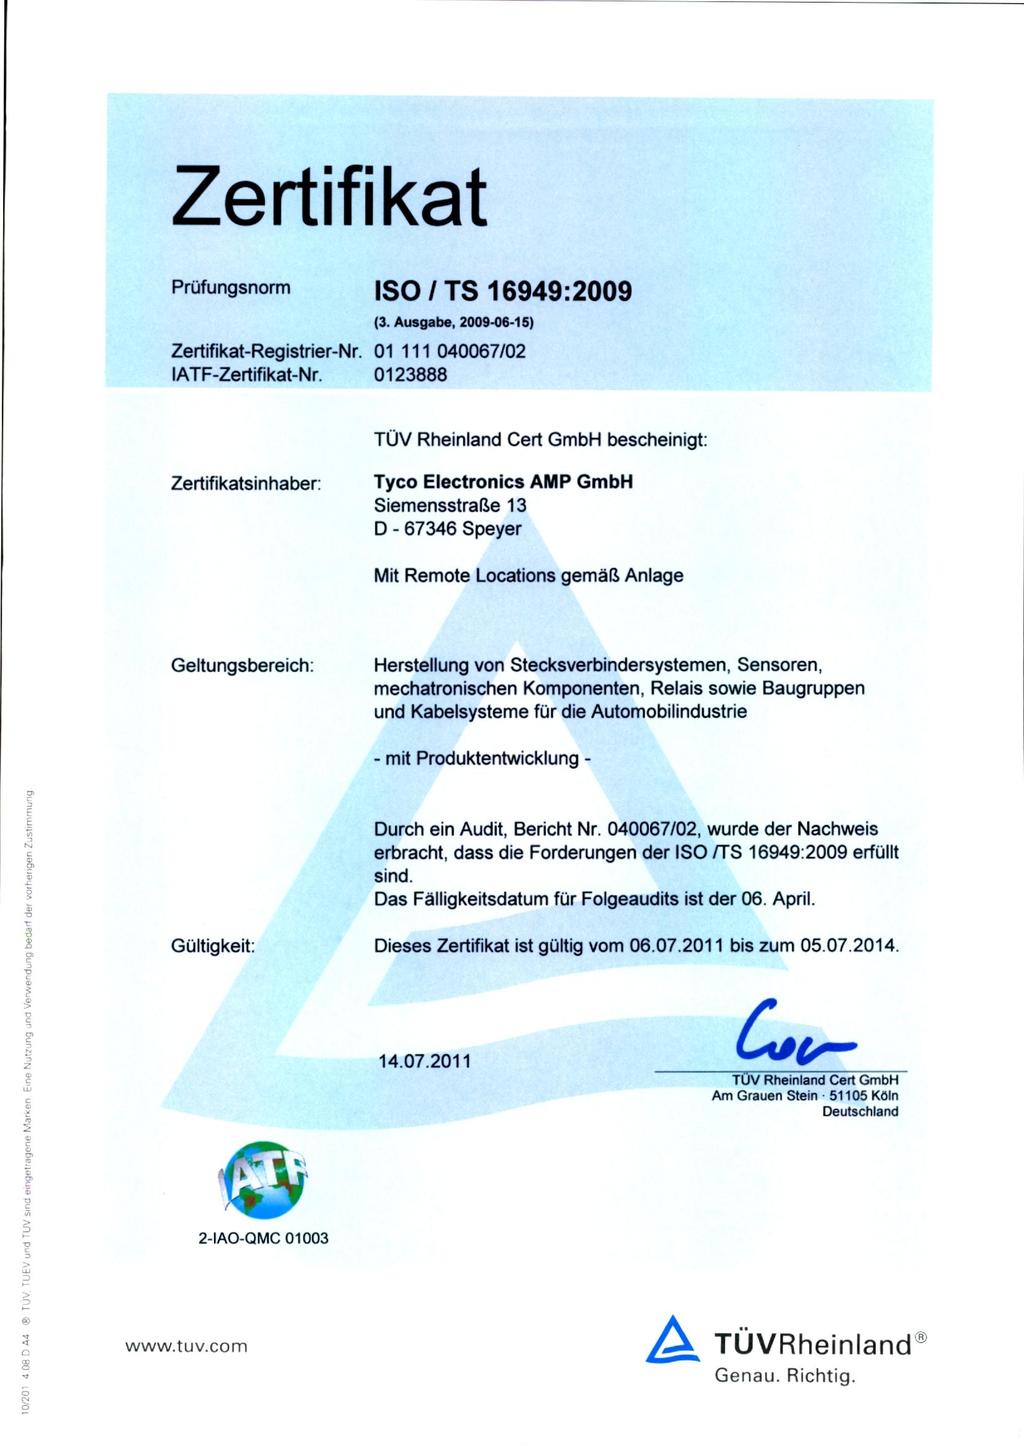 Standard ISO / TS 16949:29 (3 `d edition, 29-6-15) Amperesstr. 12-14 D - 64625 Bensheim Rem. Loc. Function Design.